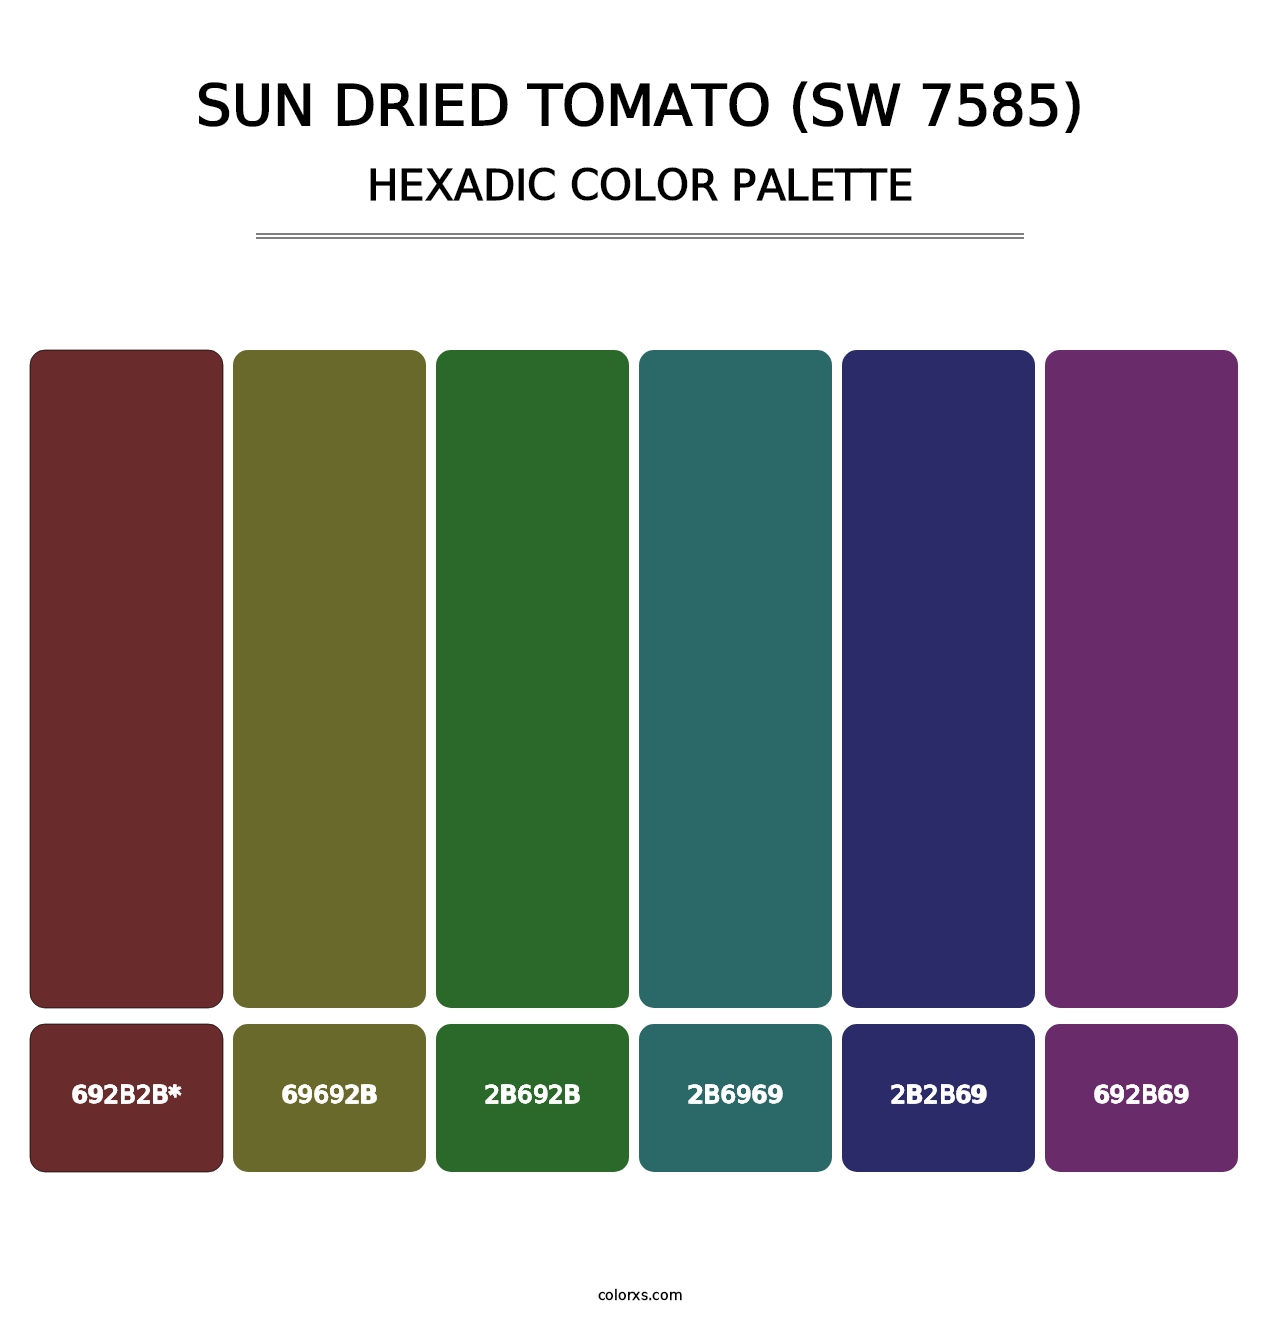 Sun Dried Tomato (SW 7585) - Hexadic Color Palette